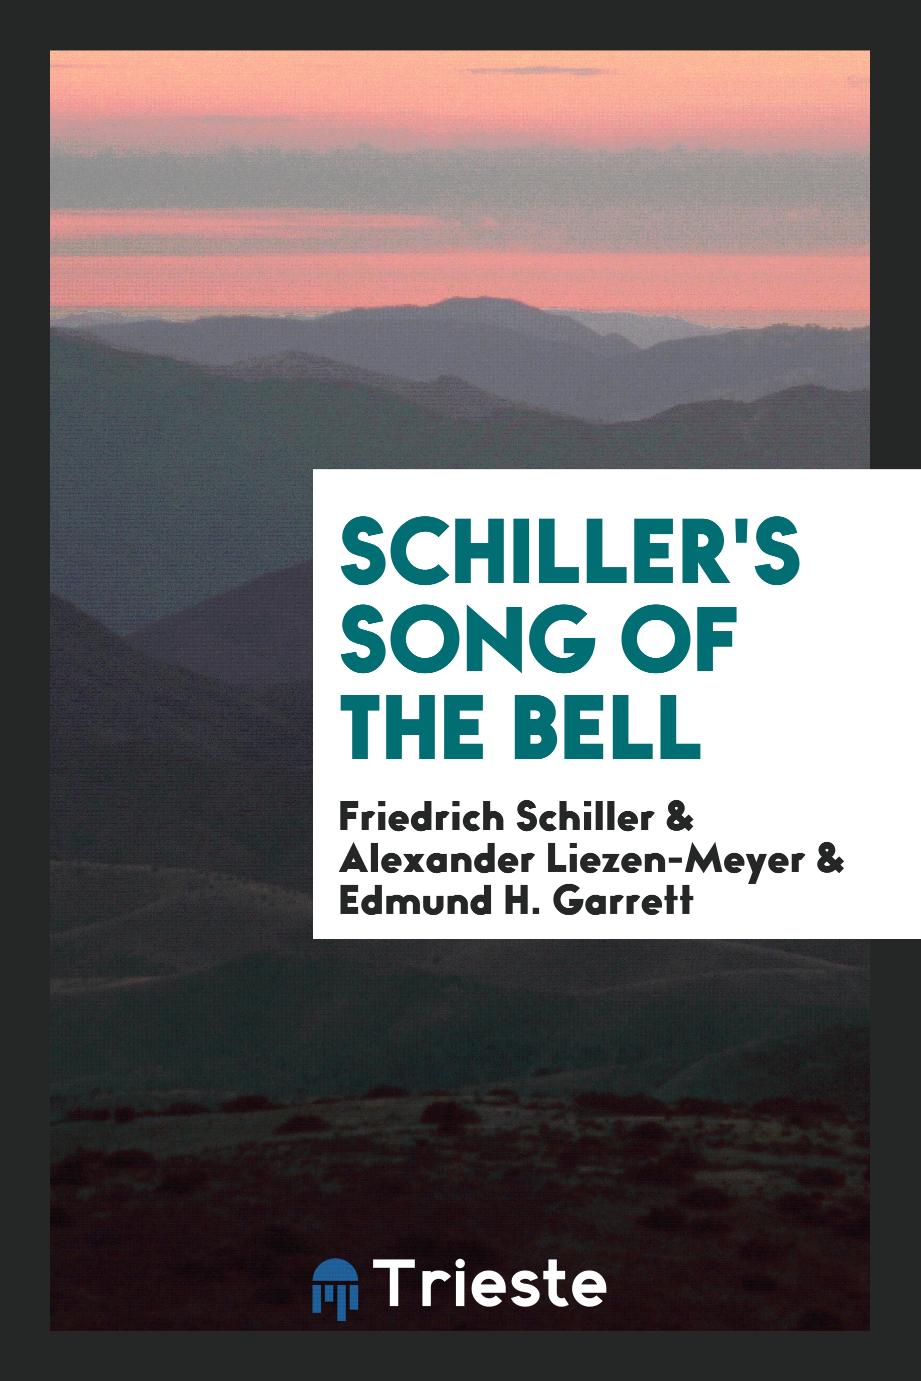 Schiller's Song of the bell